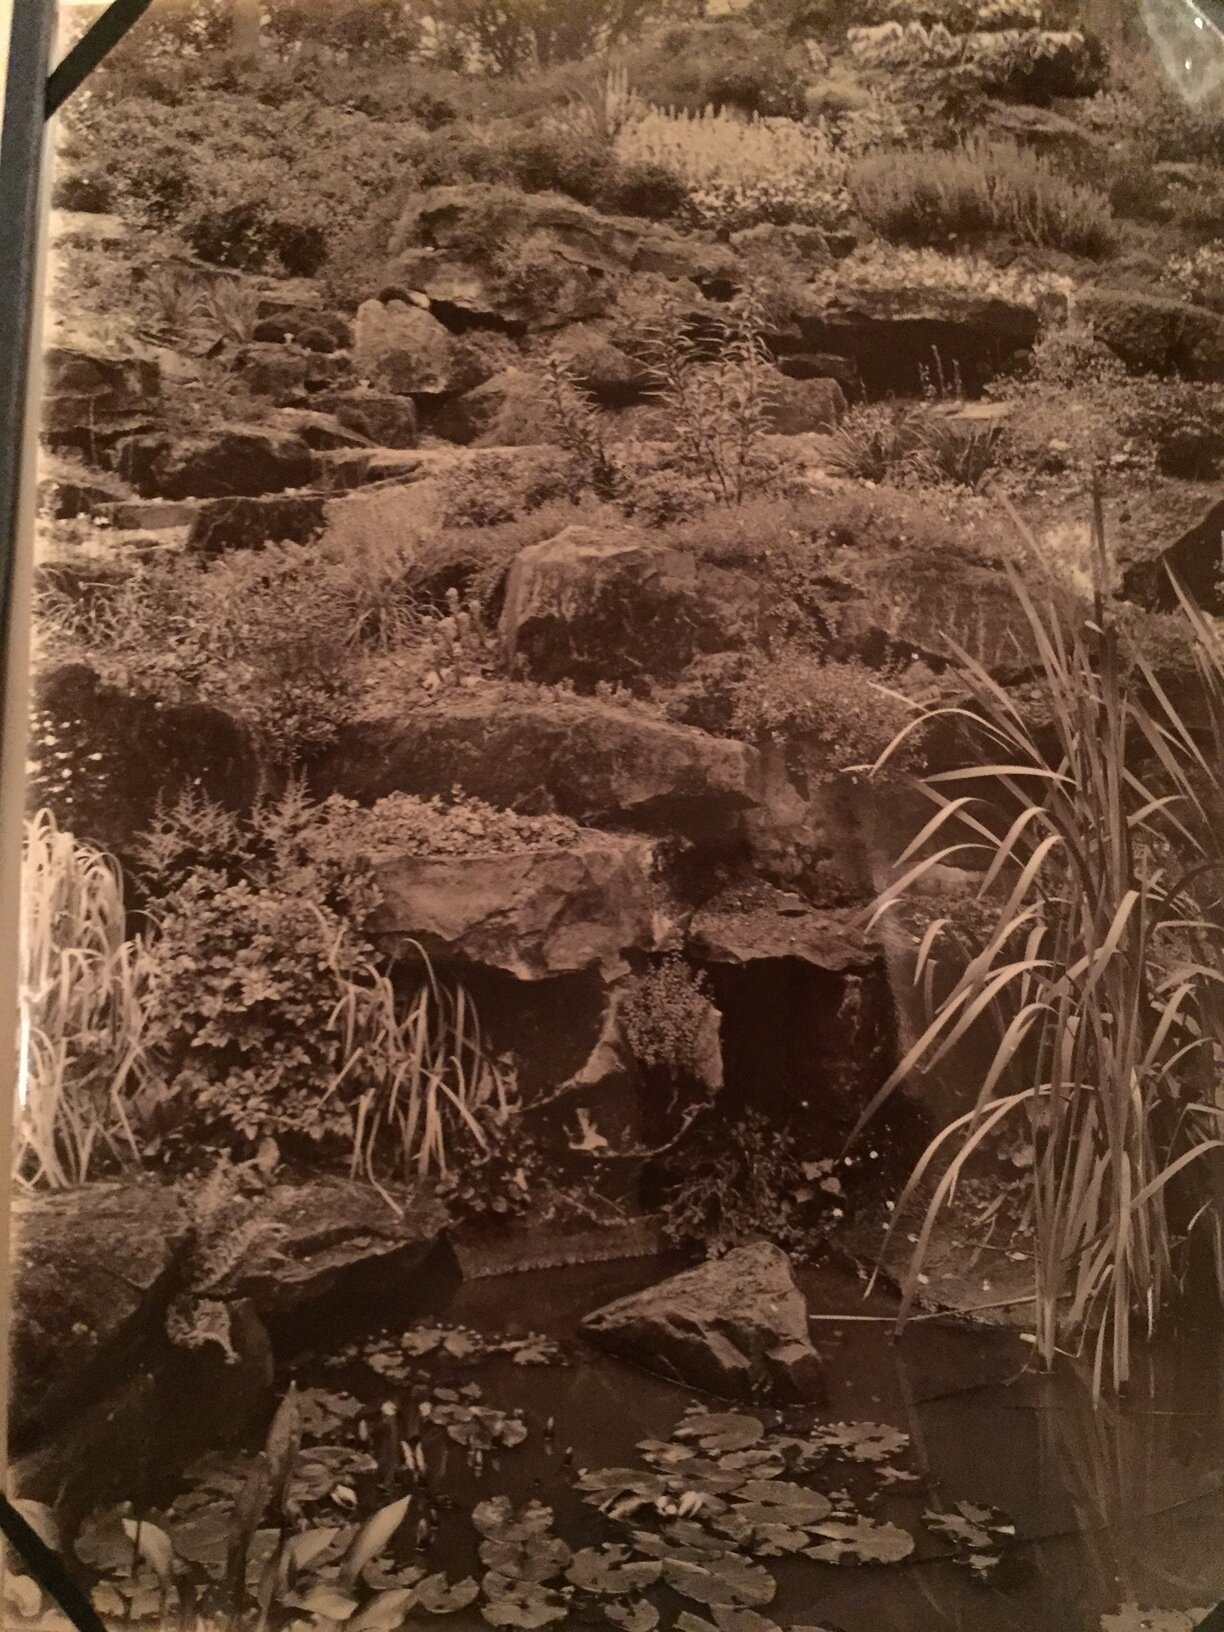 Original image of the Rock Garden